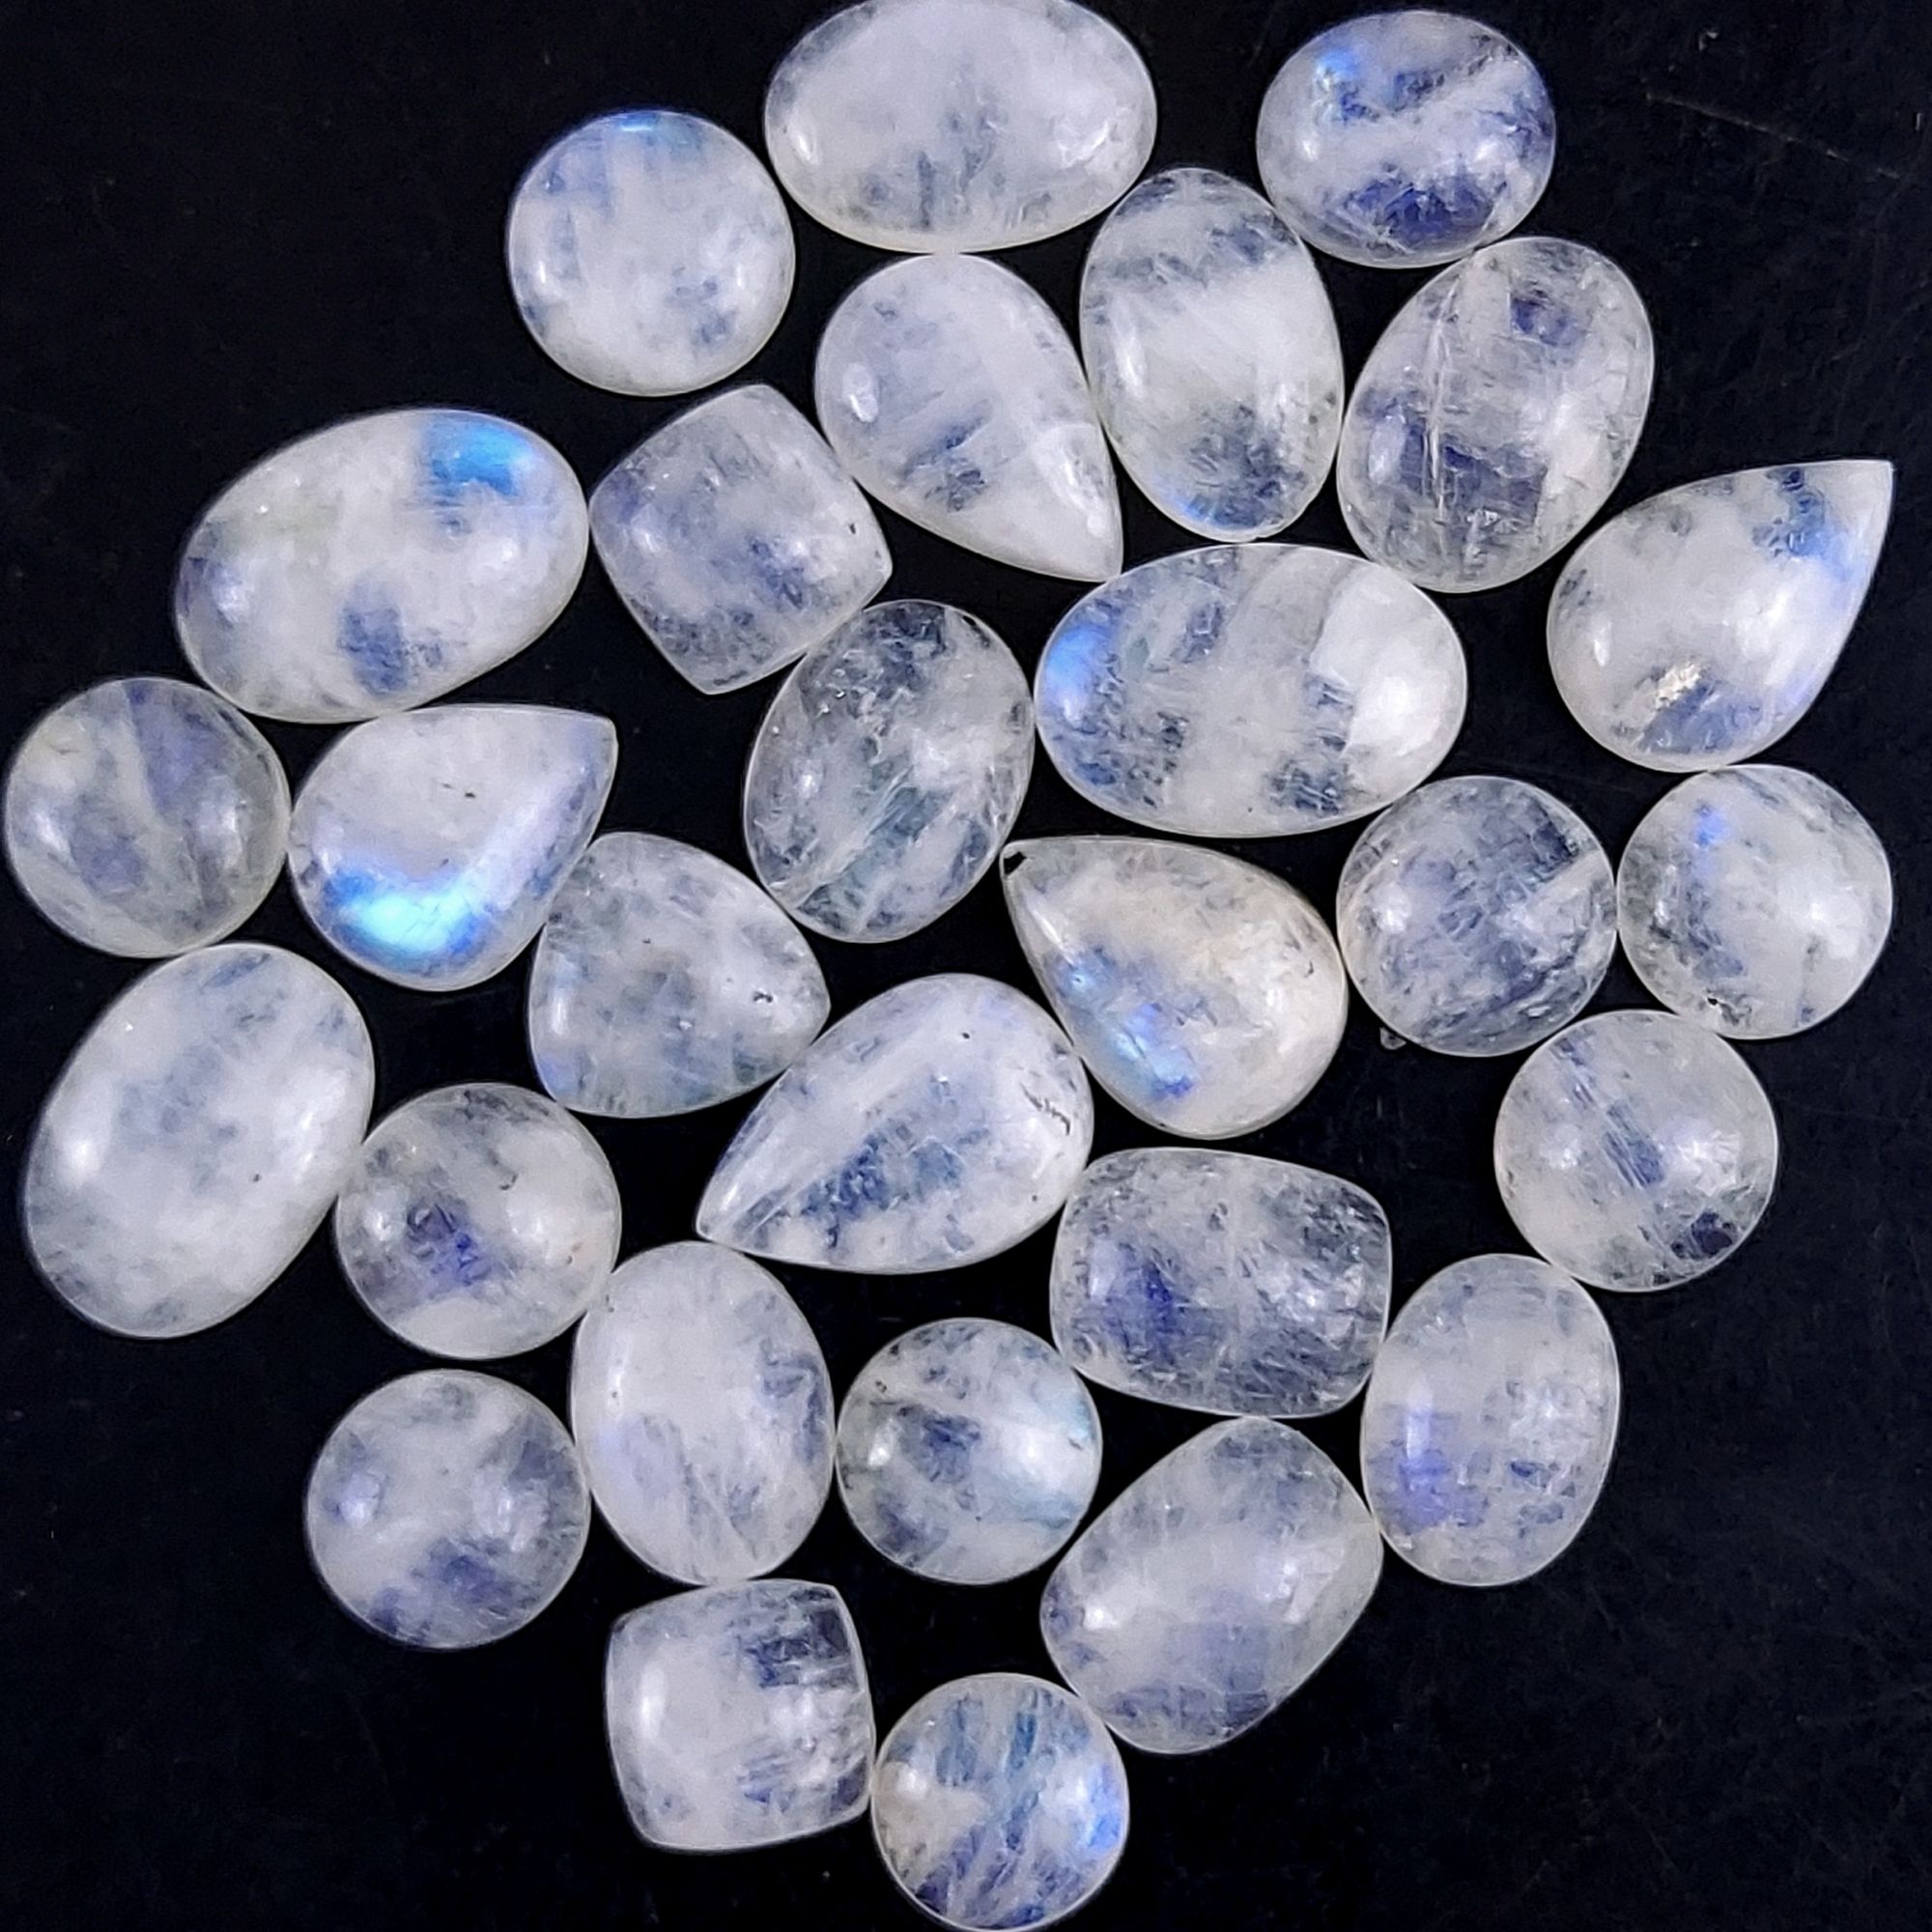 29Pcs 259Cts Natural Rainbow Cabochon Gemstone For Jewelry Making Crystal Cabochon Semi-Precious Rainbow Moonstone Flat Back Gemstone Lot 20x13 13x13mm#685